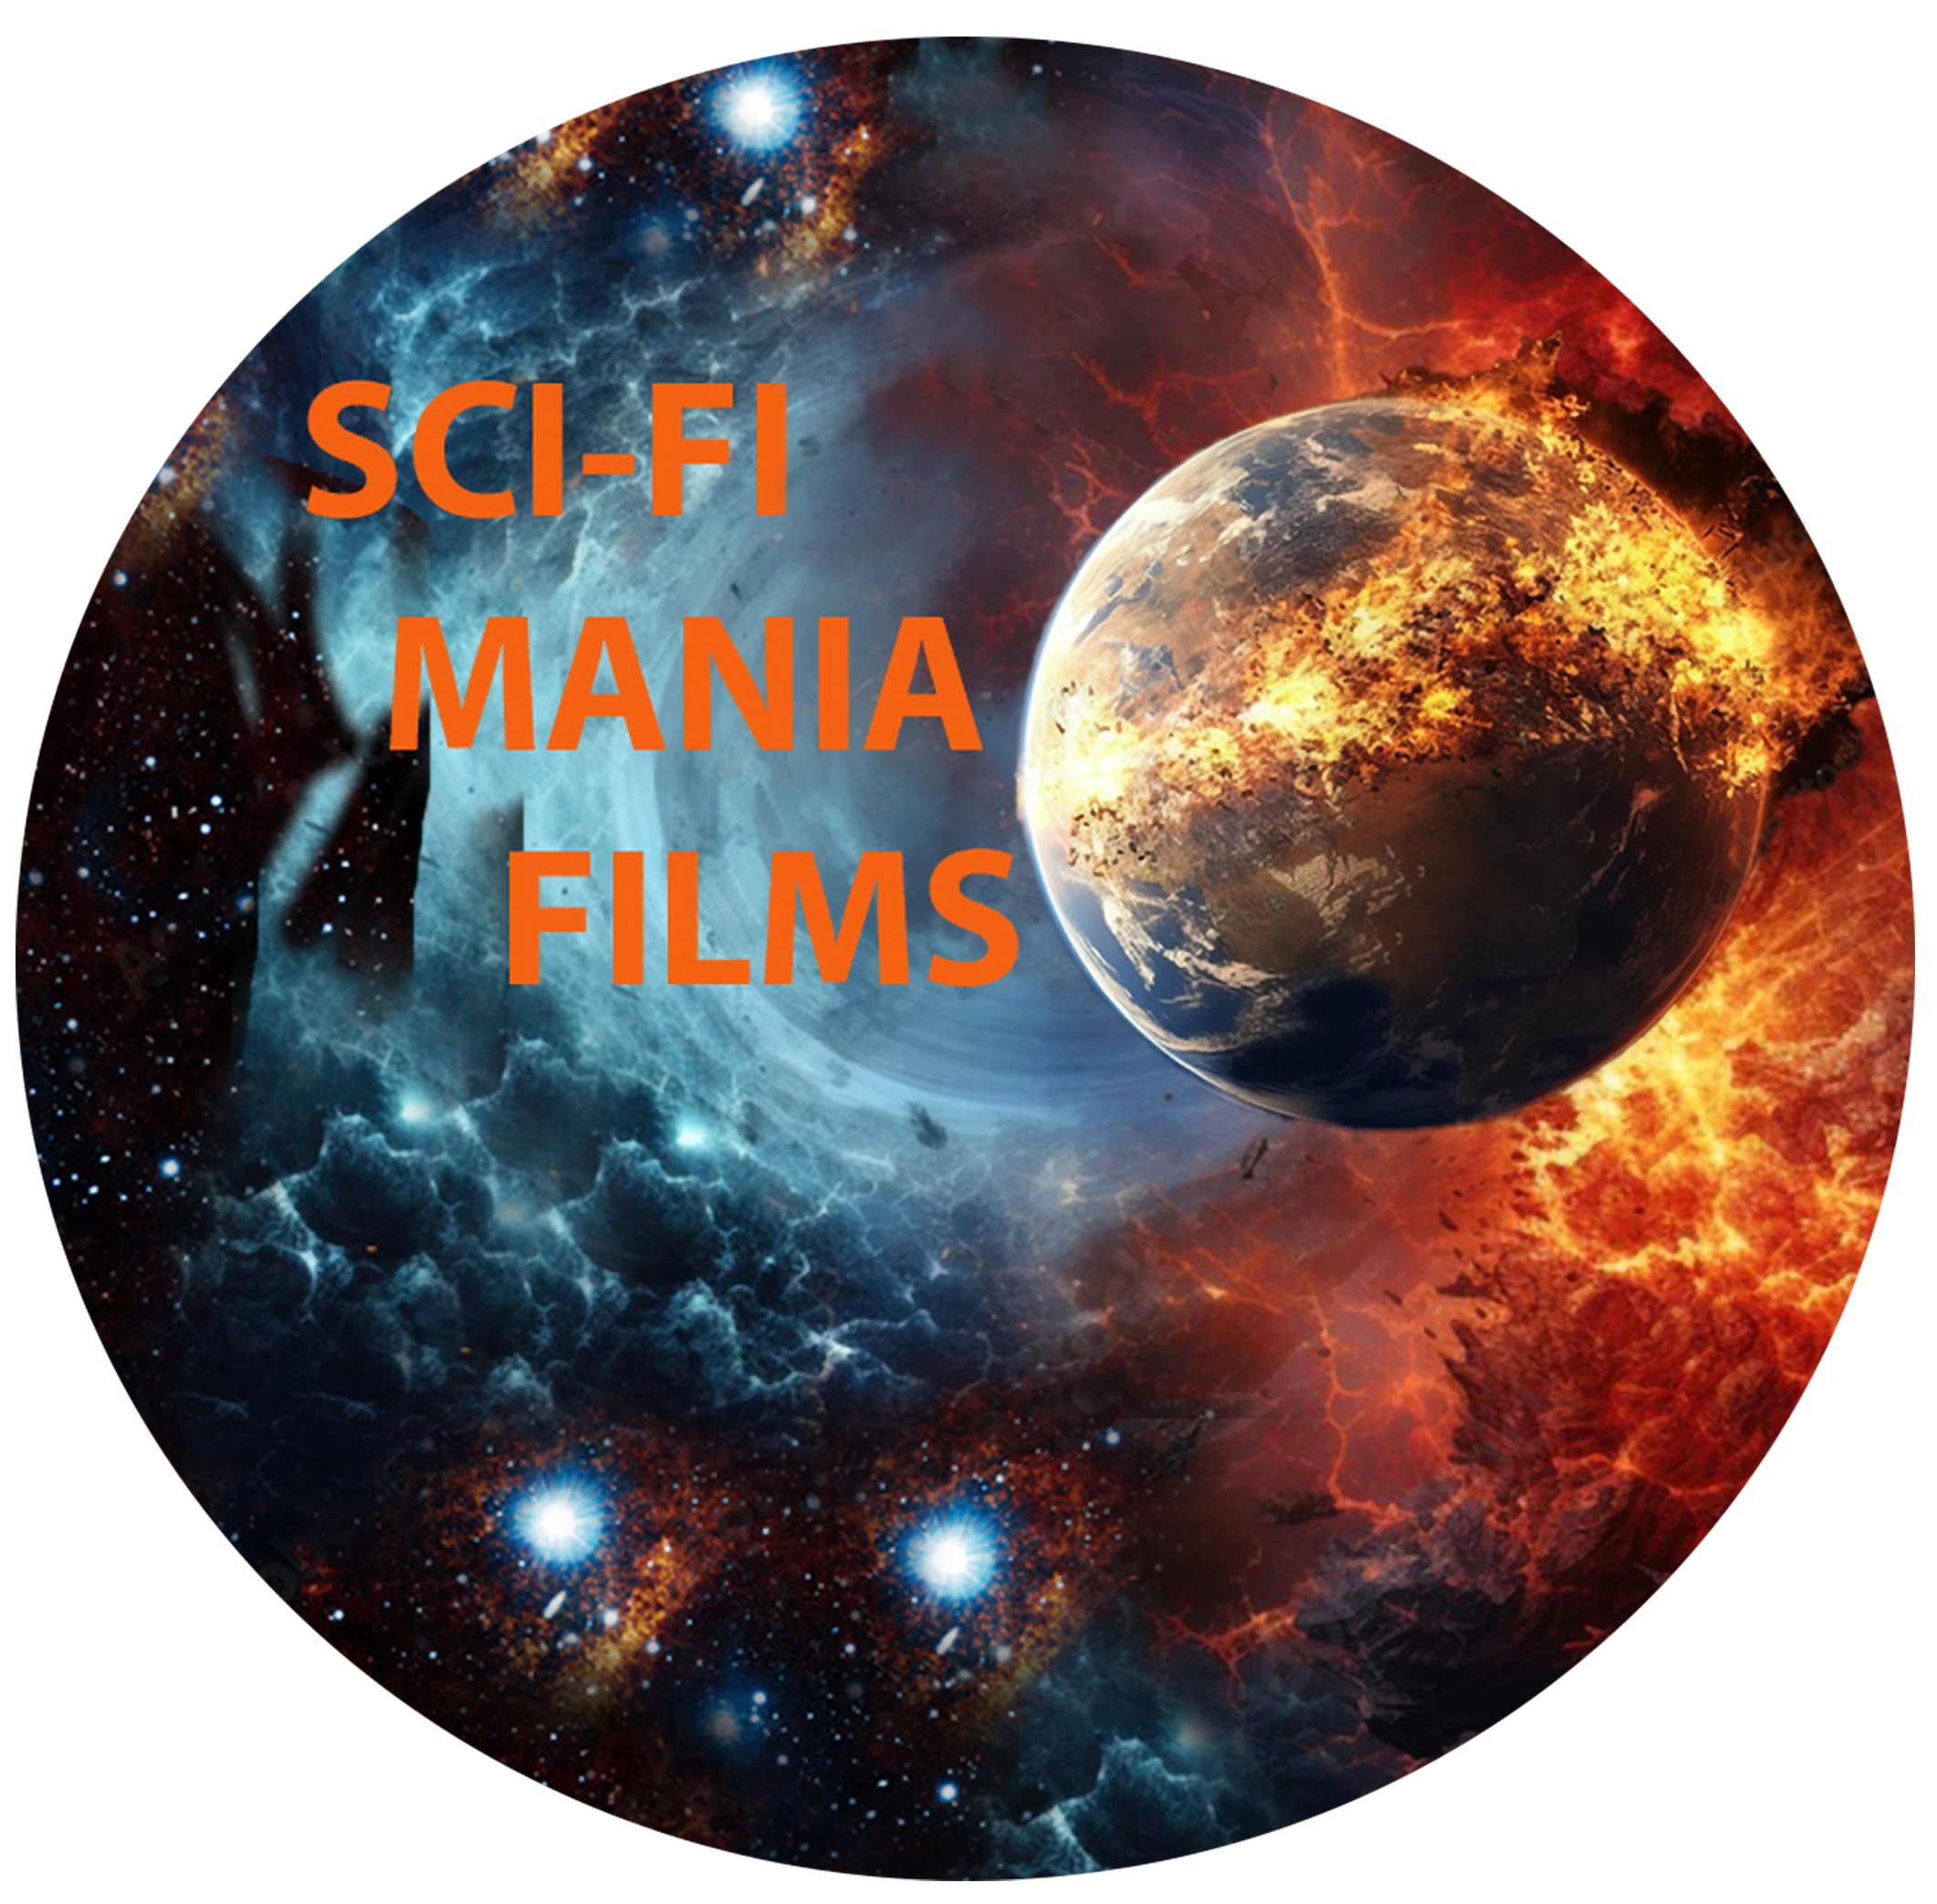 SCI FI Mania Films Presents